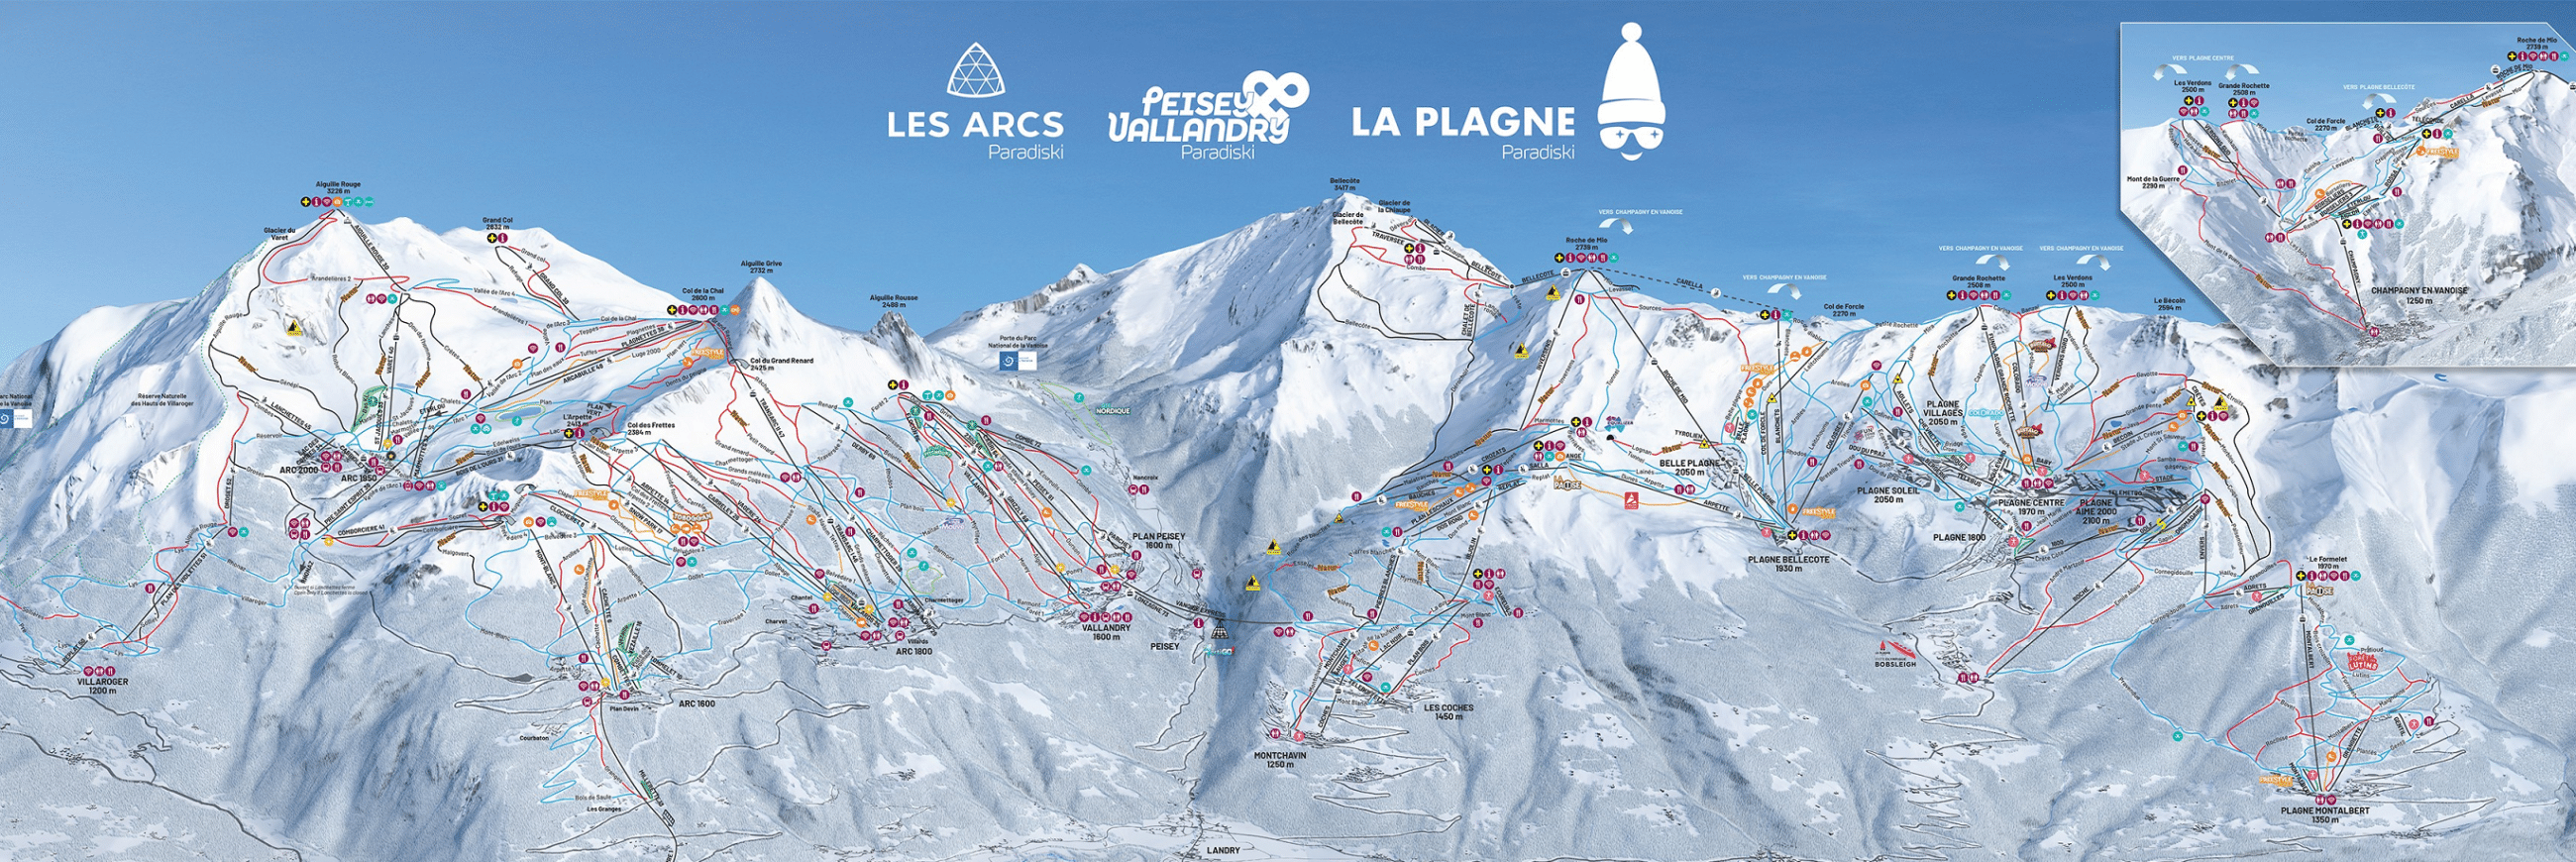 Paradiski - Les Arcs & La Plagne - Plan des pistes de ski